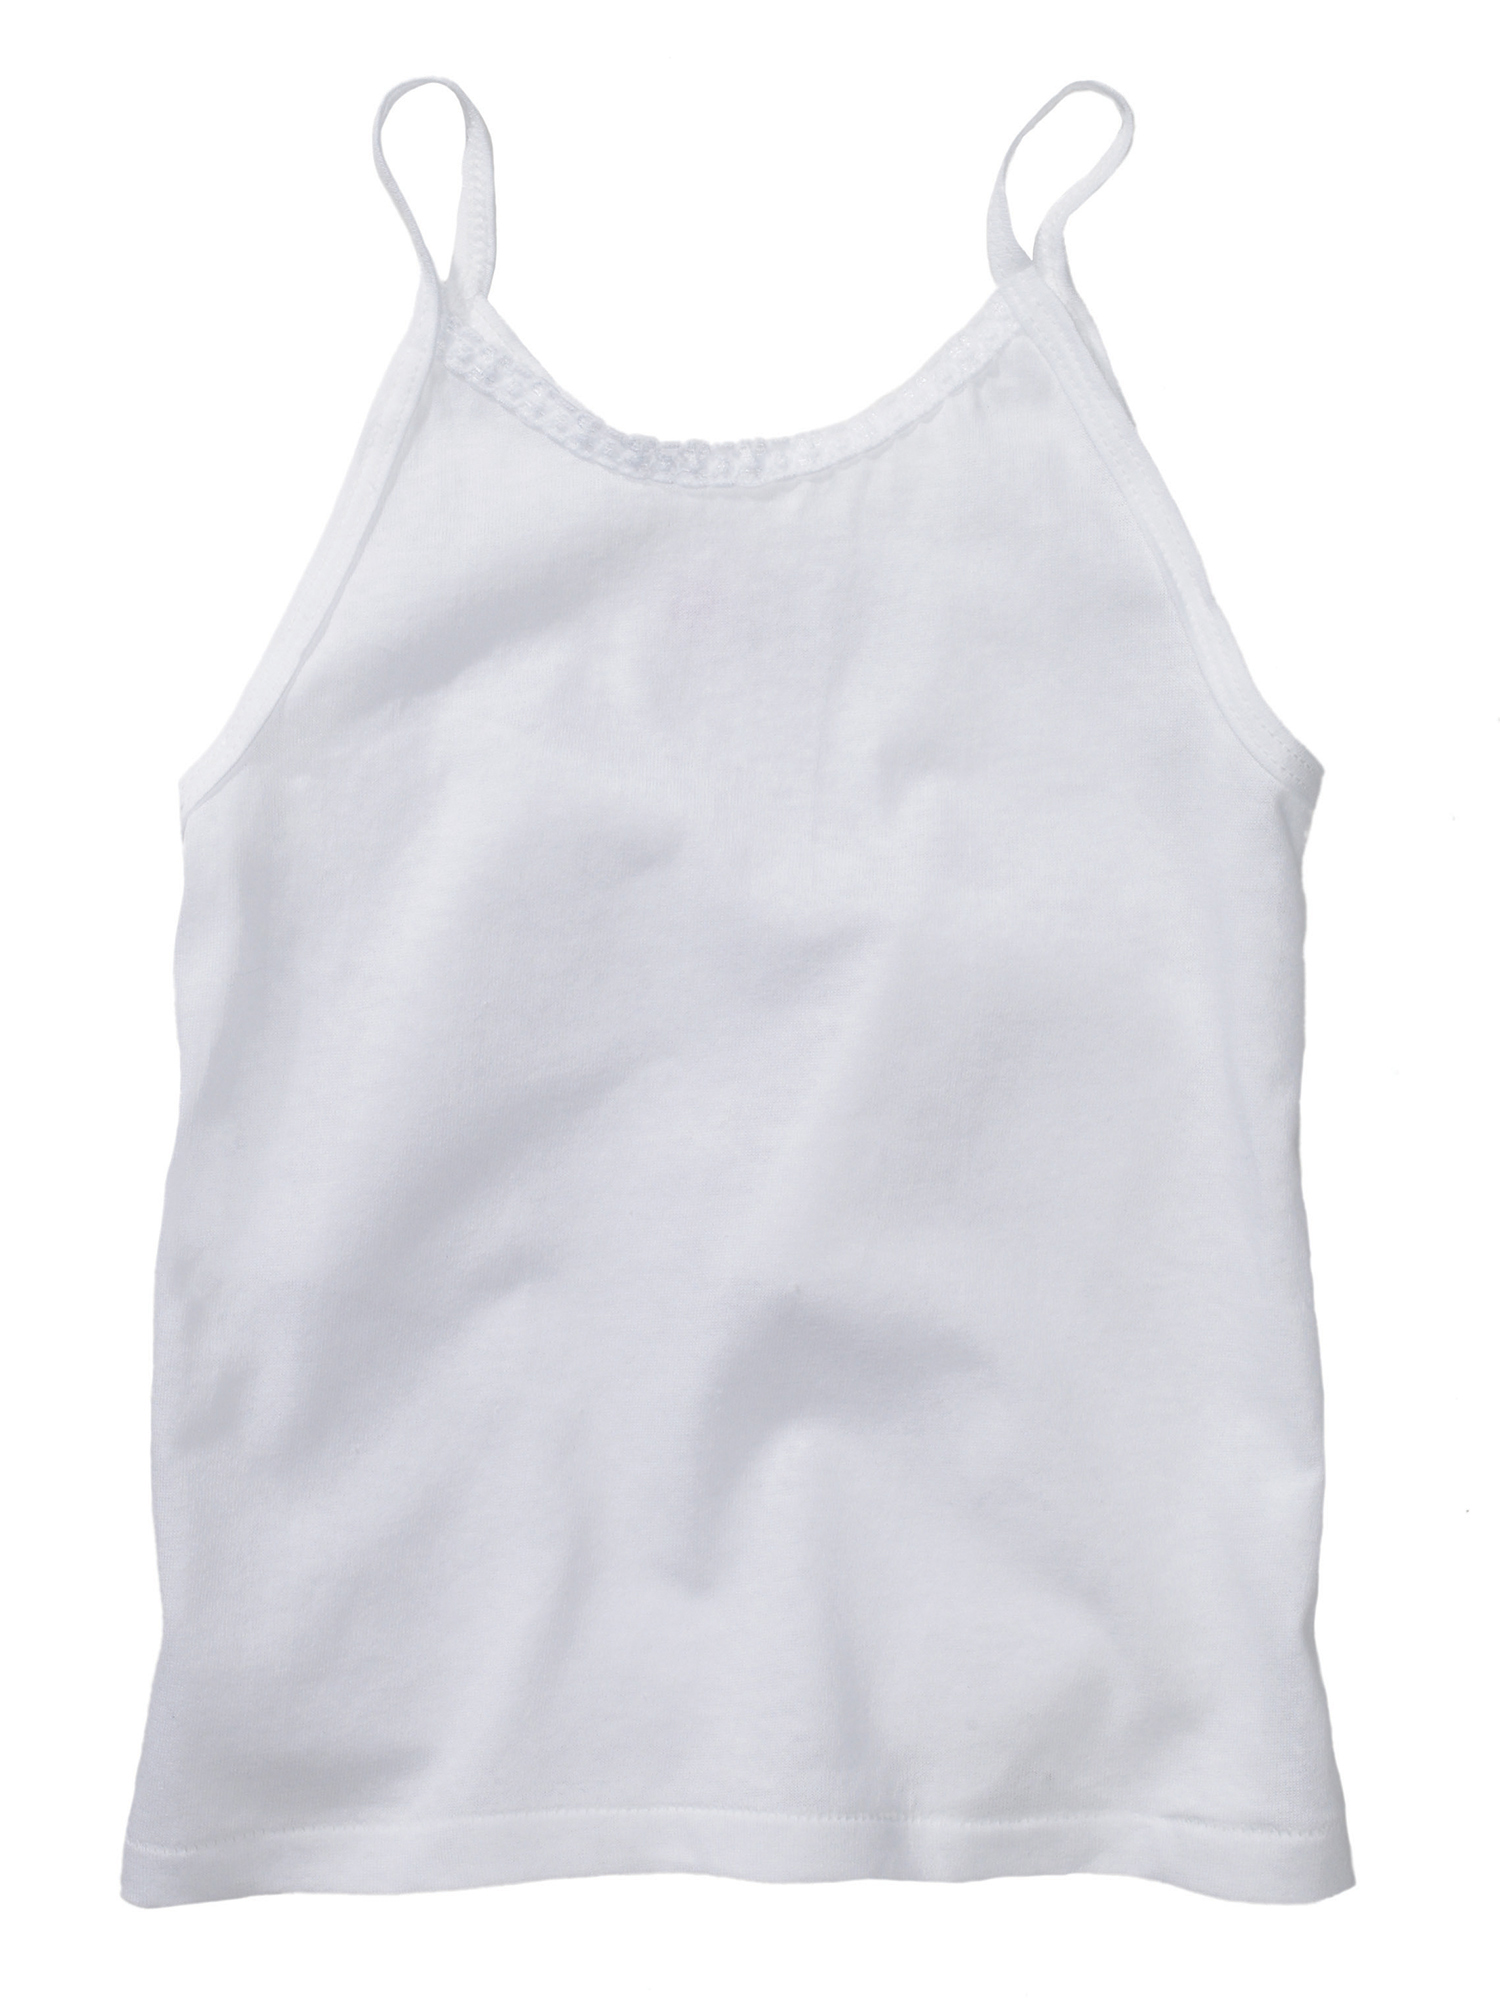 Hanes Toddler Girls Cami Tank Undershirts, 3-Pack - image 1 of 2